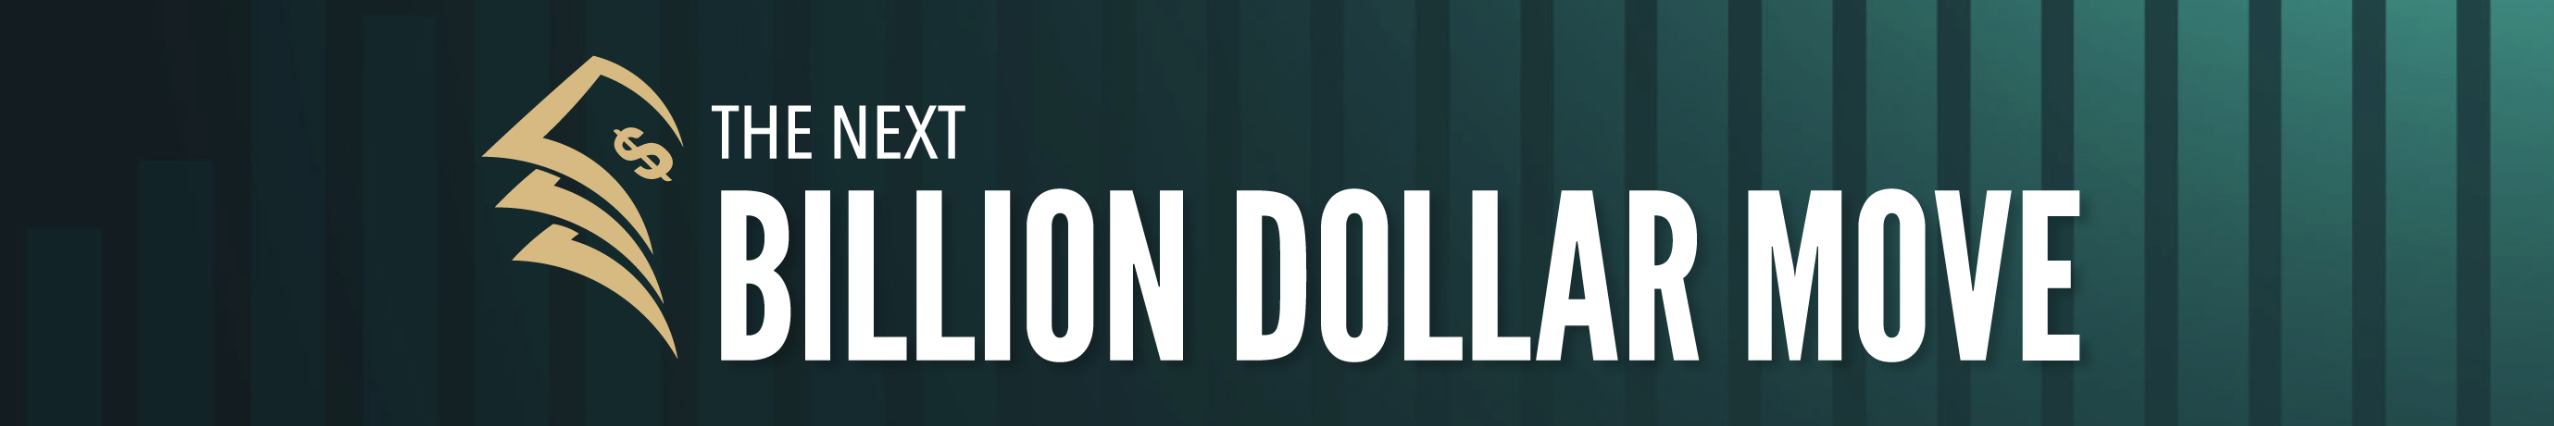 Next Billion Dollar Move Logo